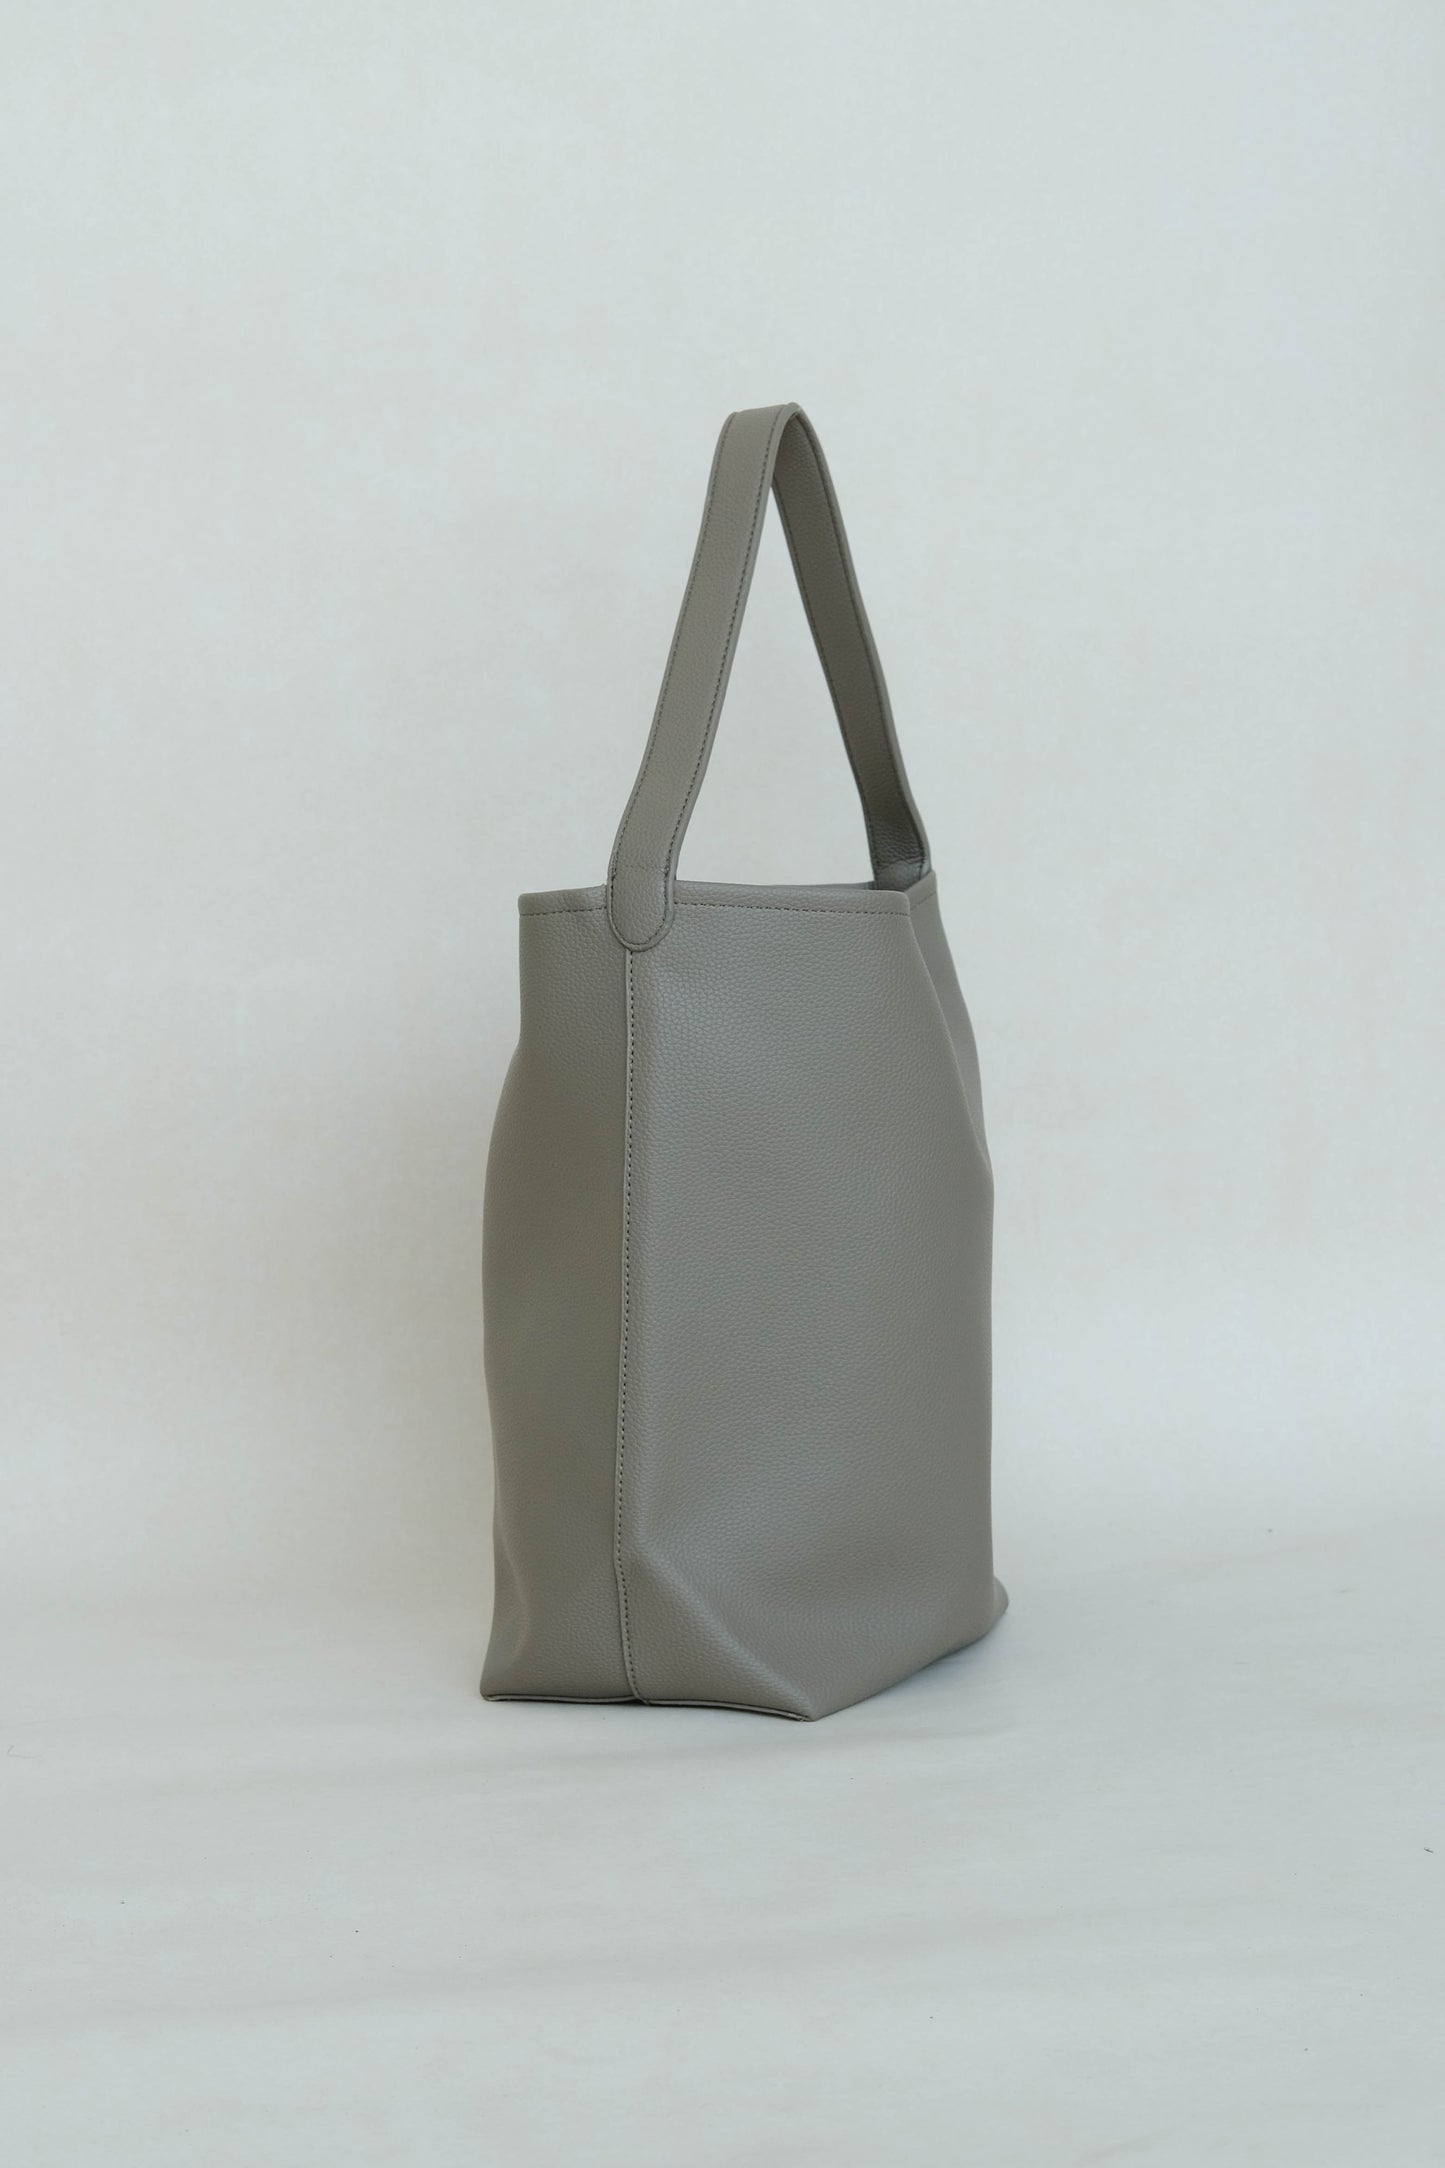 Pebbled texture soft leather simple shoulder bag in mud color